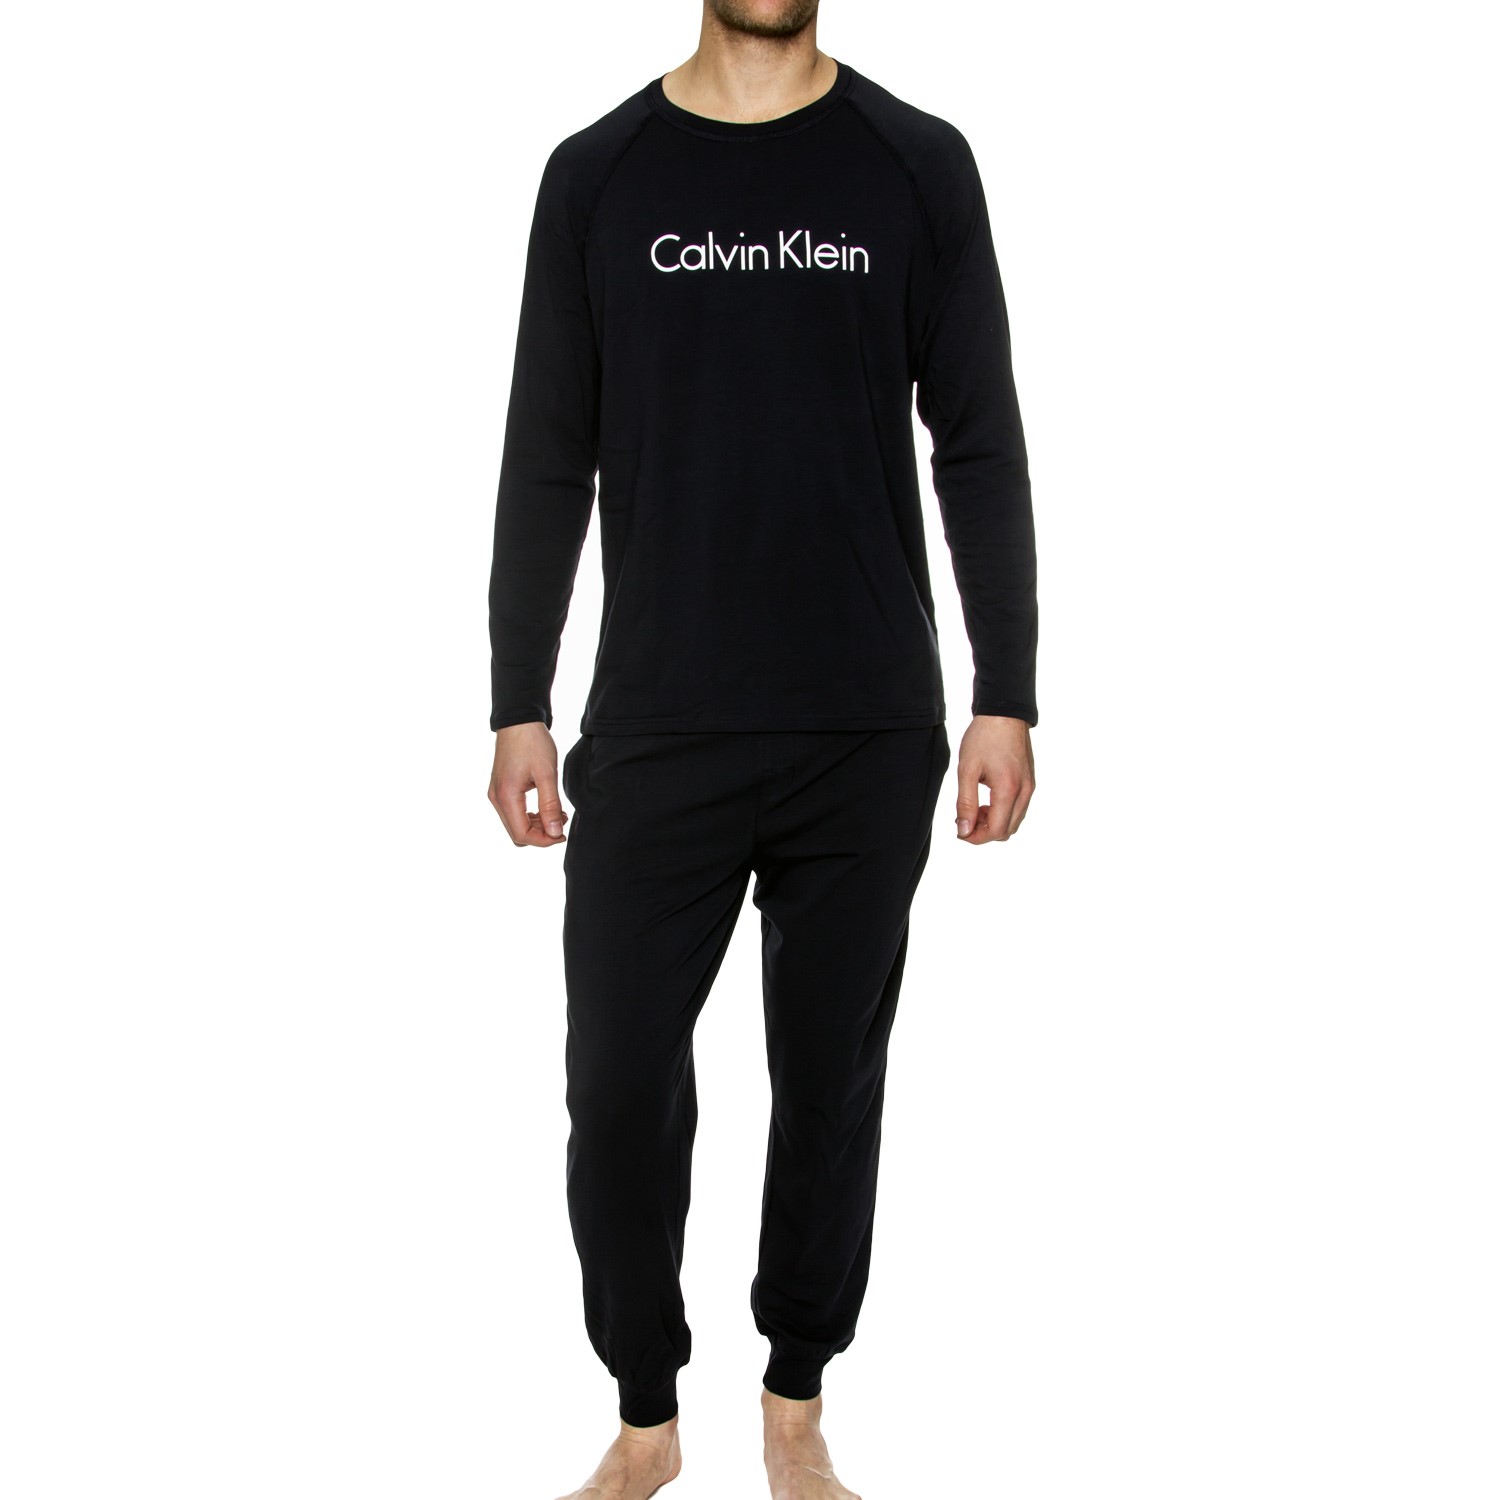 Calvin Klein Holiday PJ Knit LS Pant Set